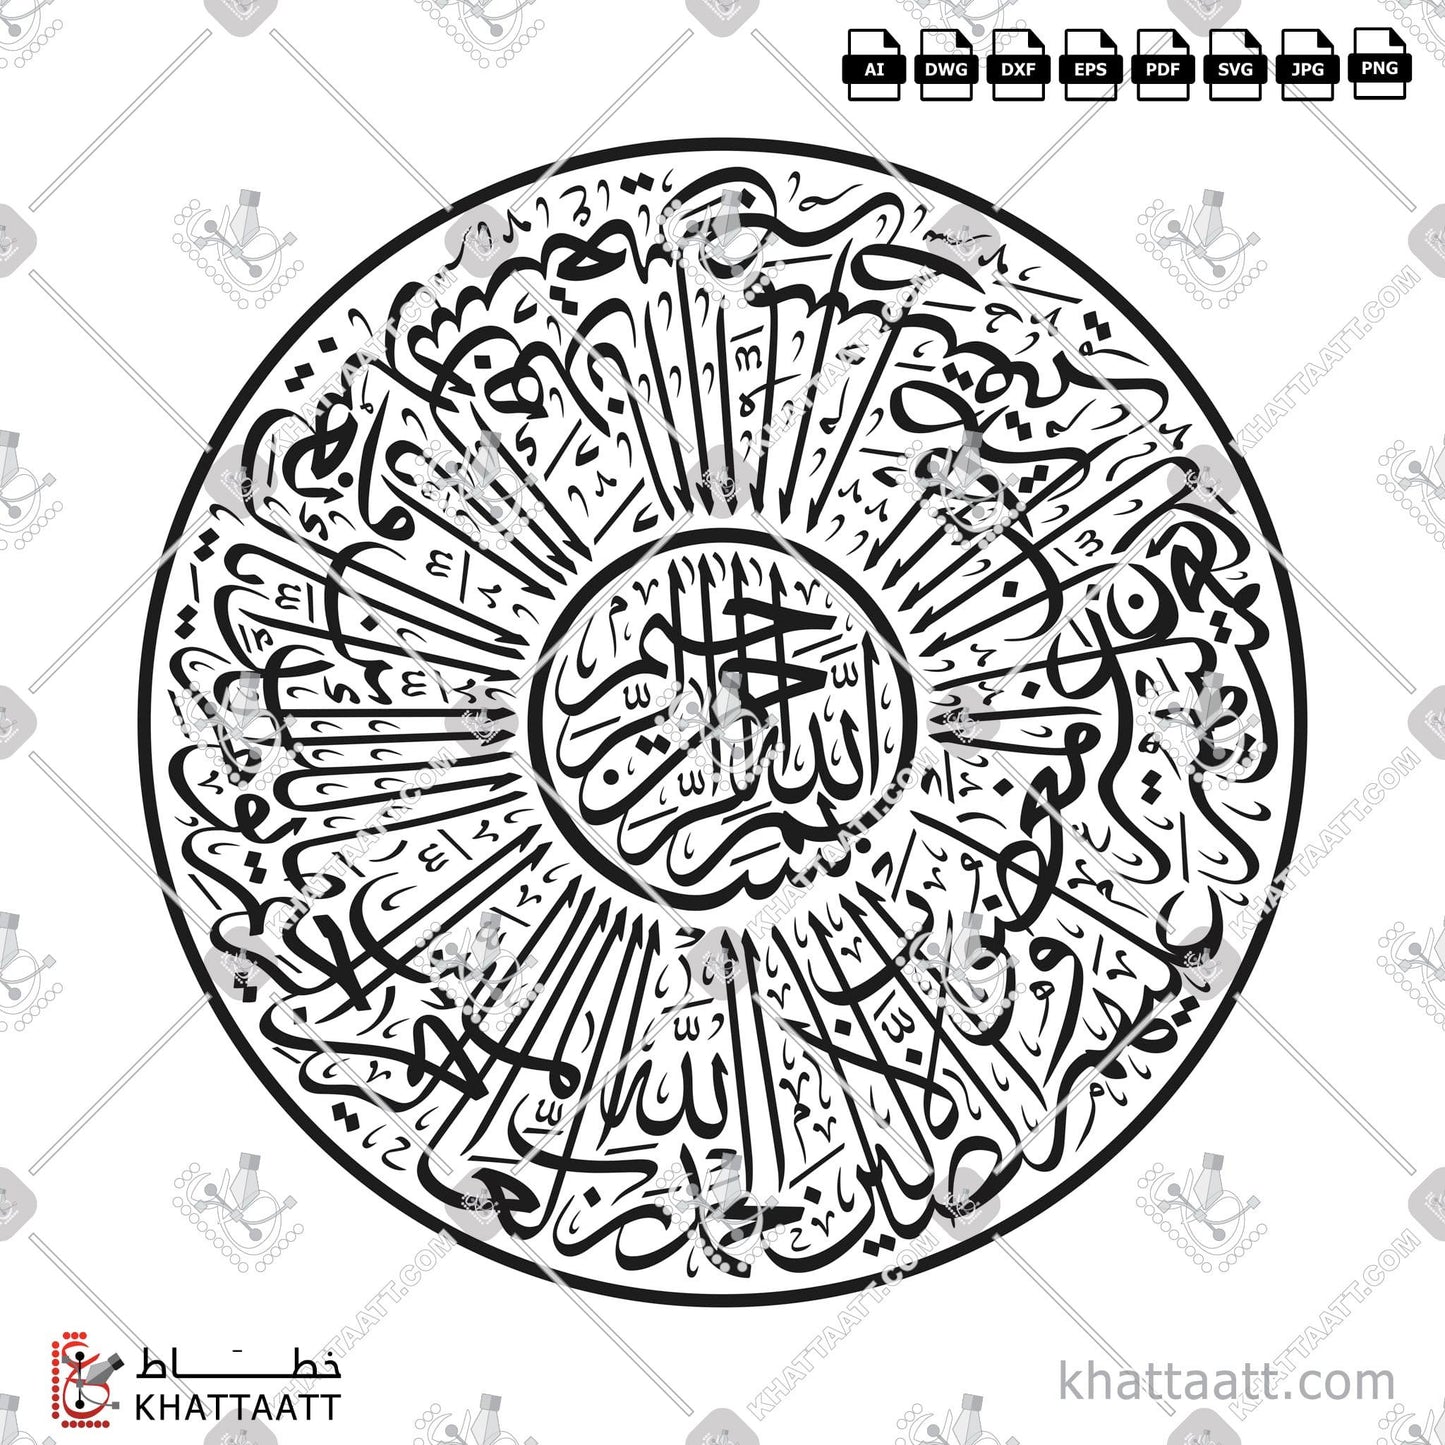 Download Arabic Calligraphy of Surat Al-Fatiha - سورة الفاتحة in Thuluth - خط الثلث in vector and .png